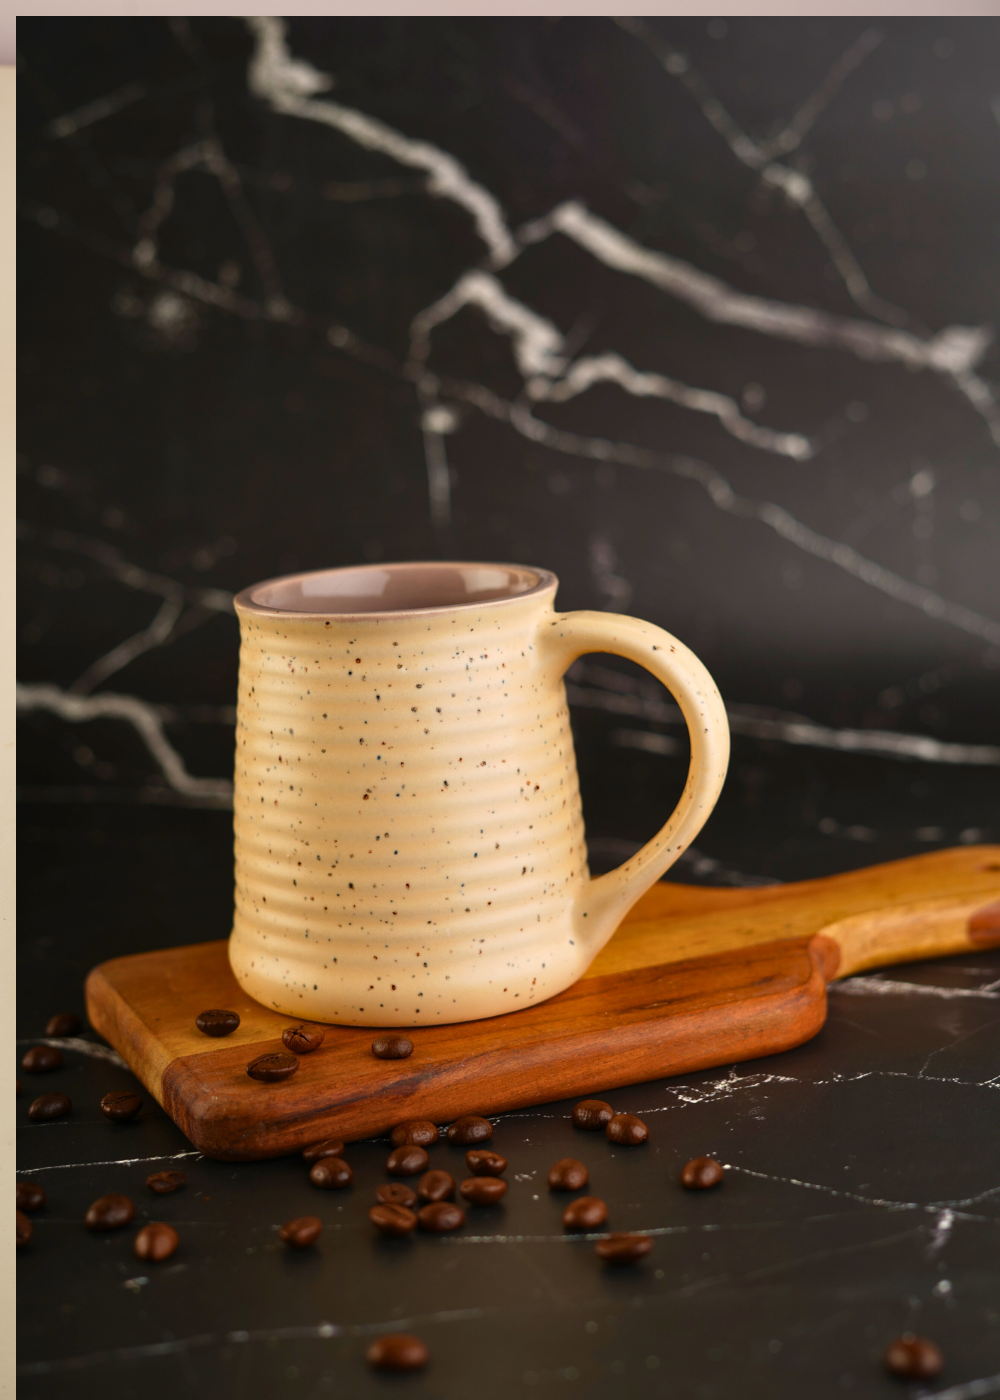 Coffee mug on wooden surface